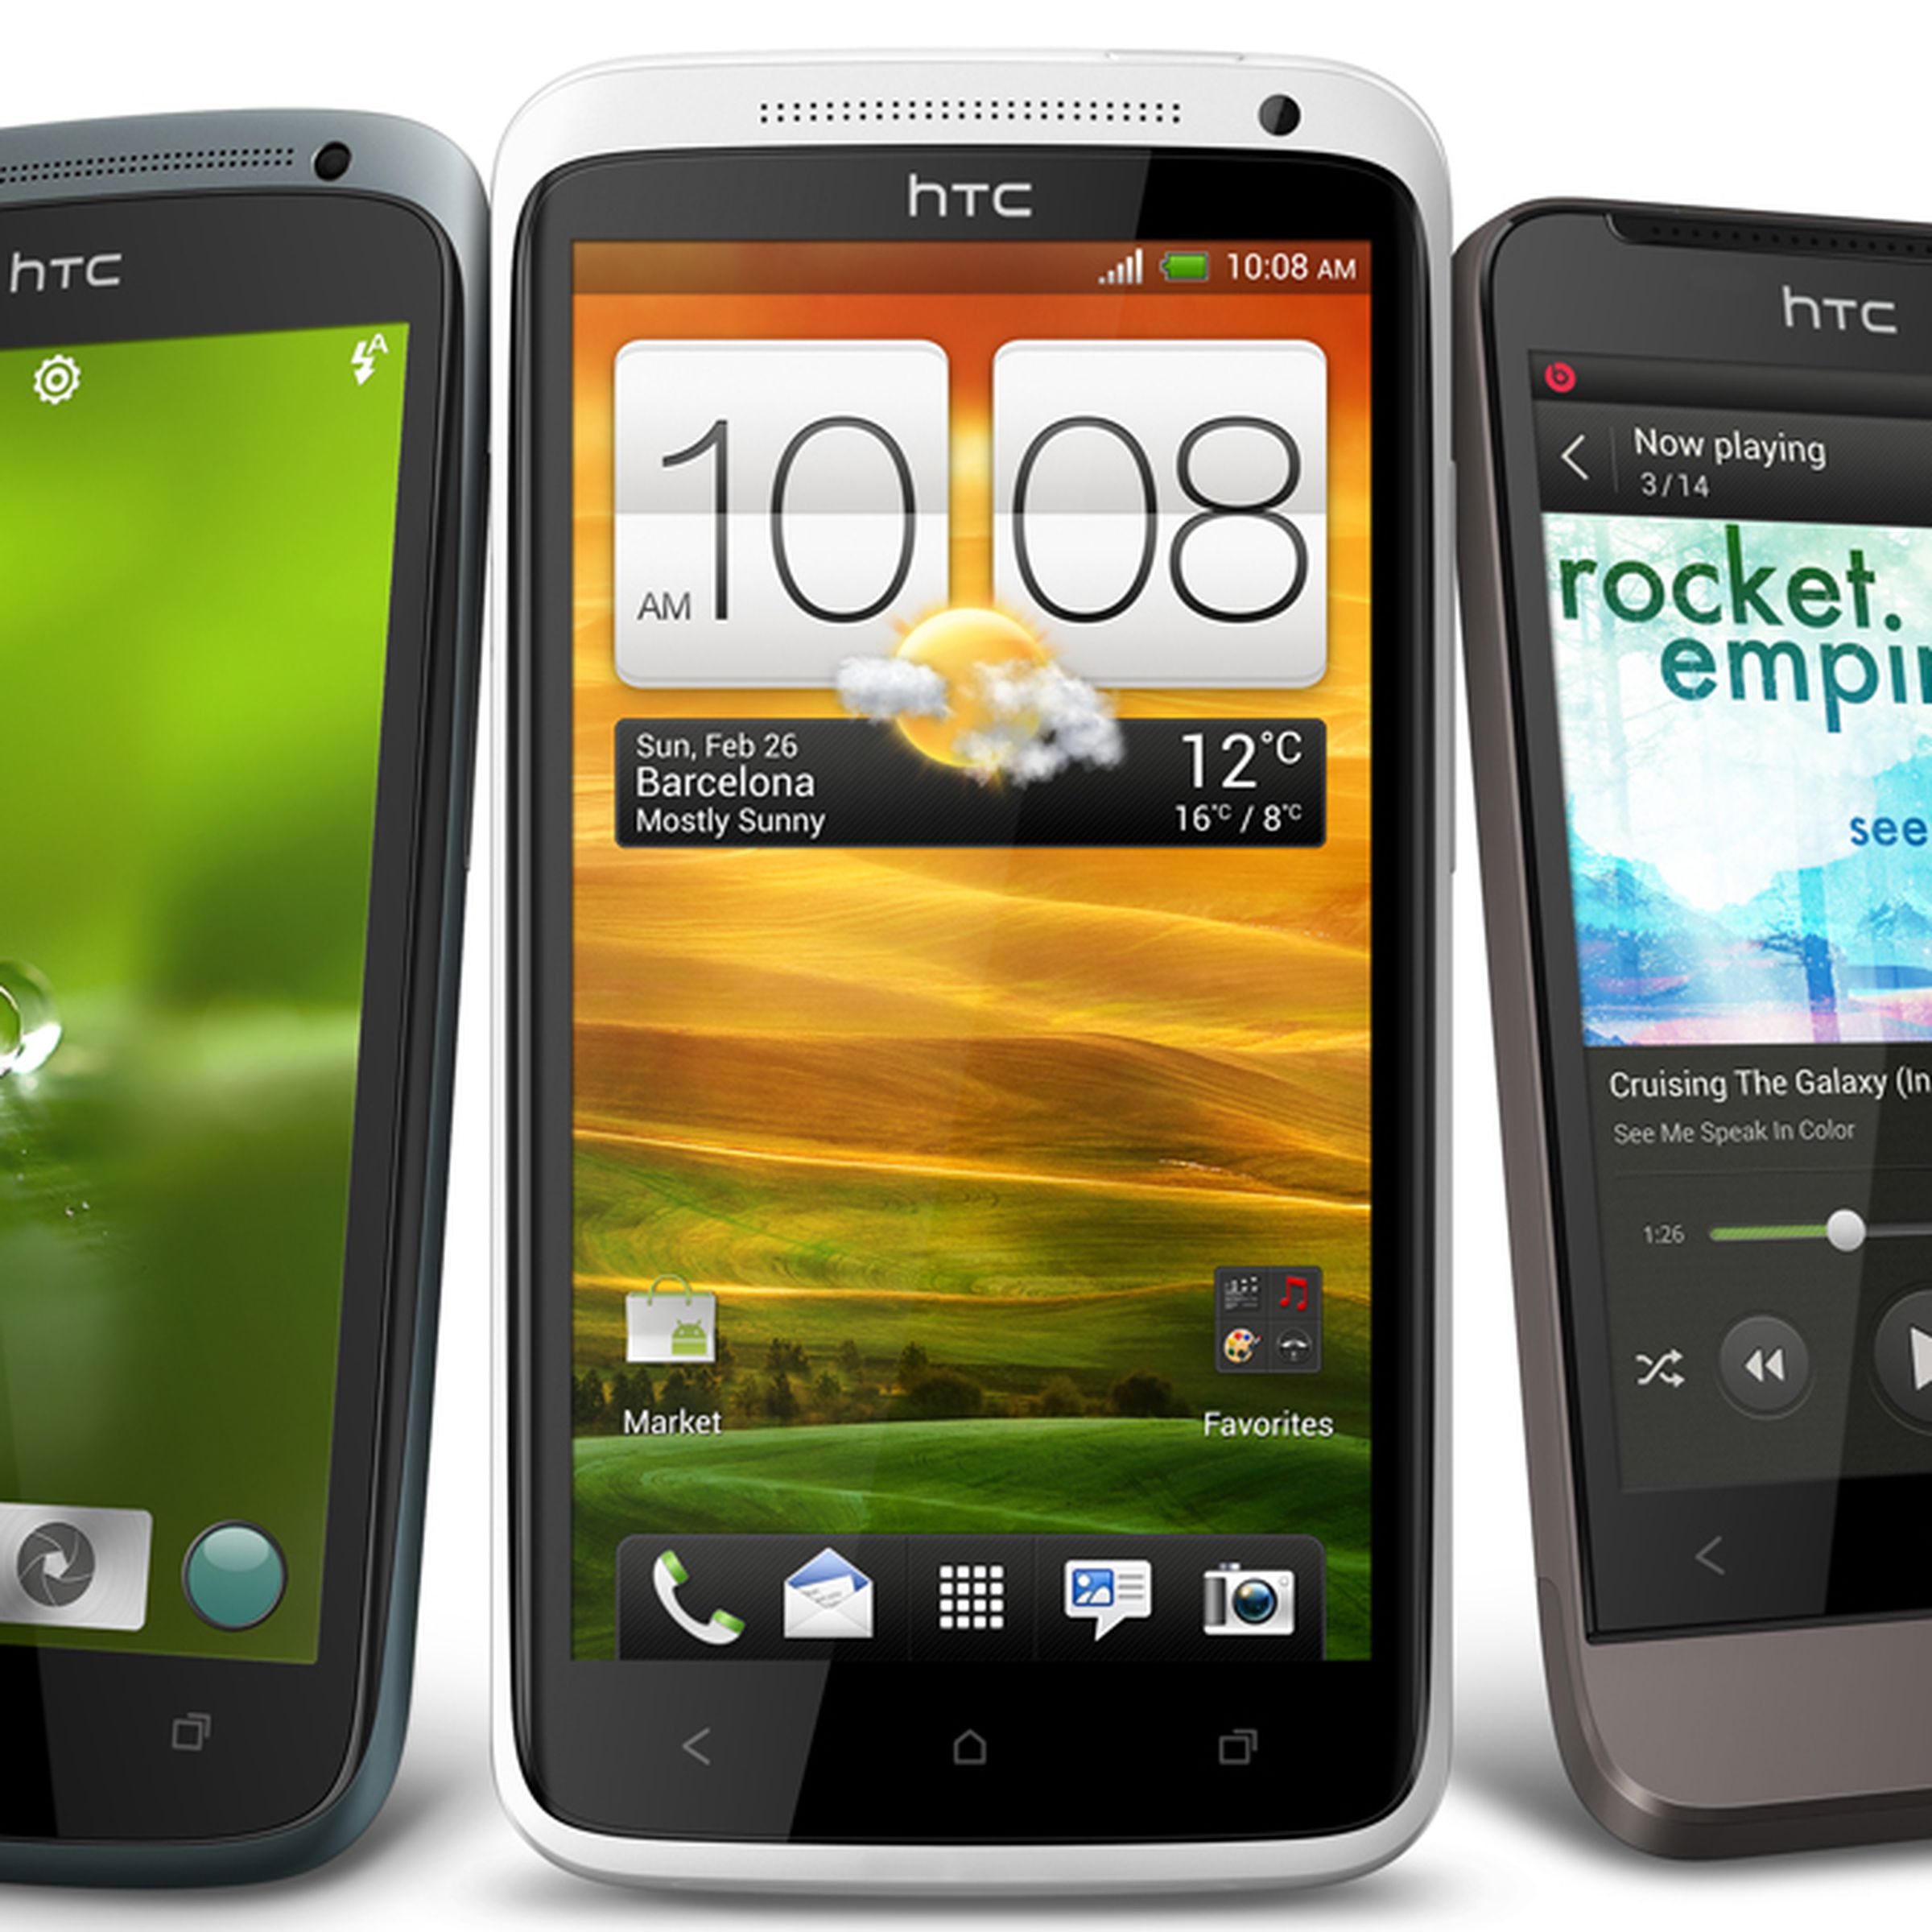 HTC One sereis of phones